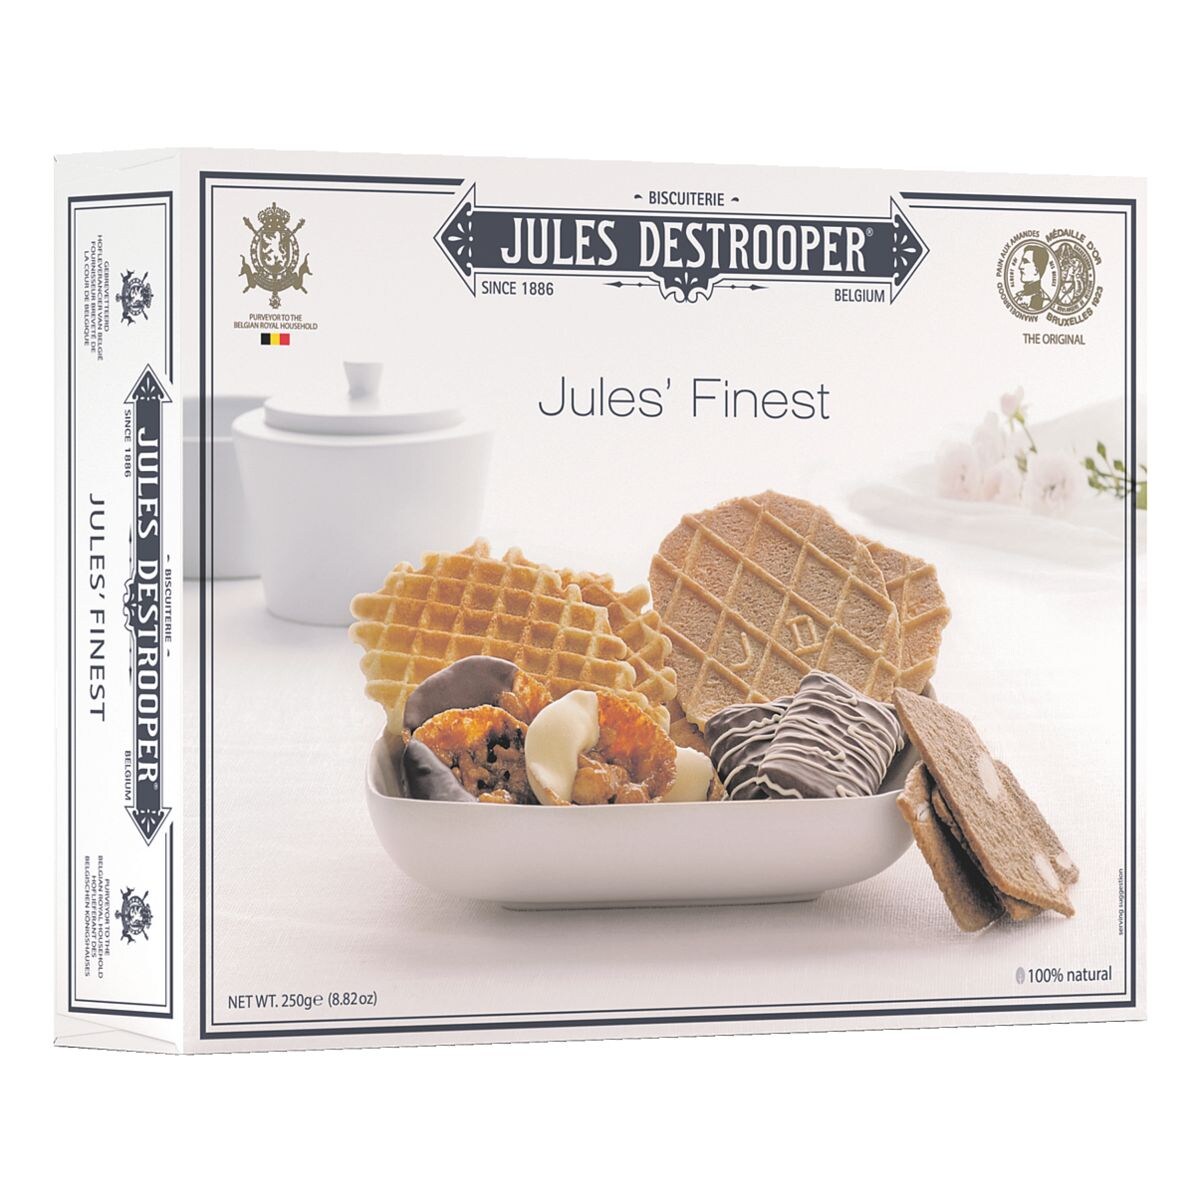 Jules Destrooper Assortiment de biscuits  Jules' Finest 